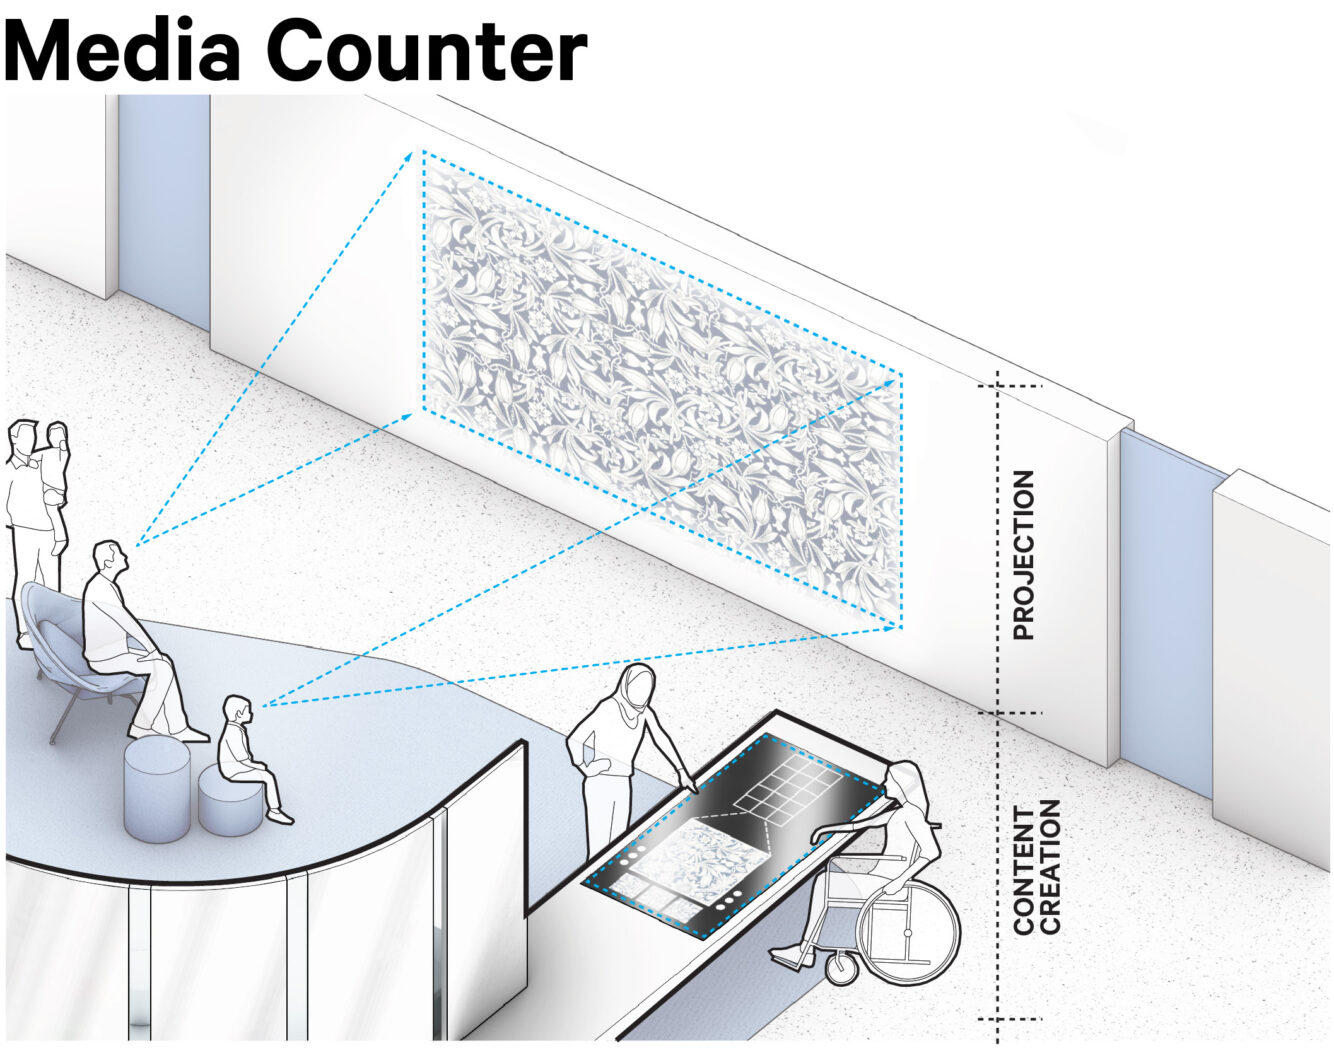 Media Counter Diagram_labelled